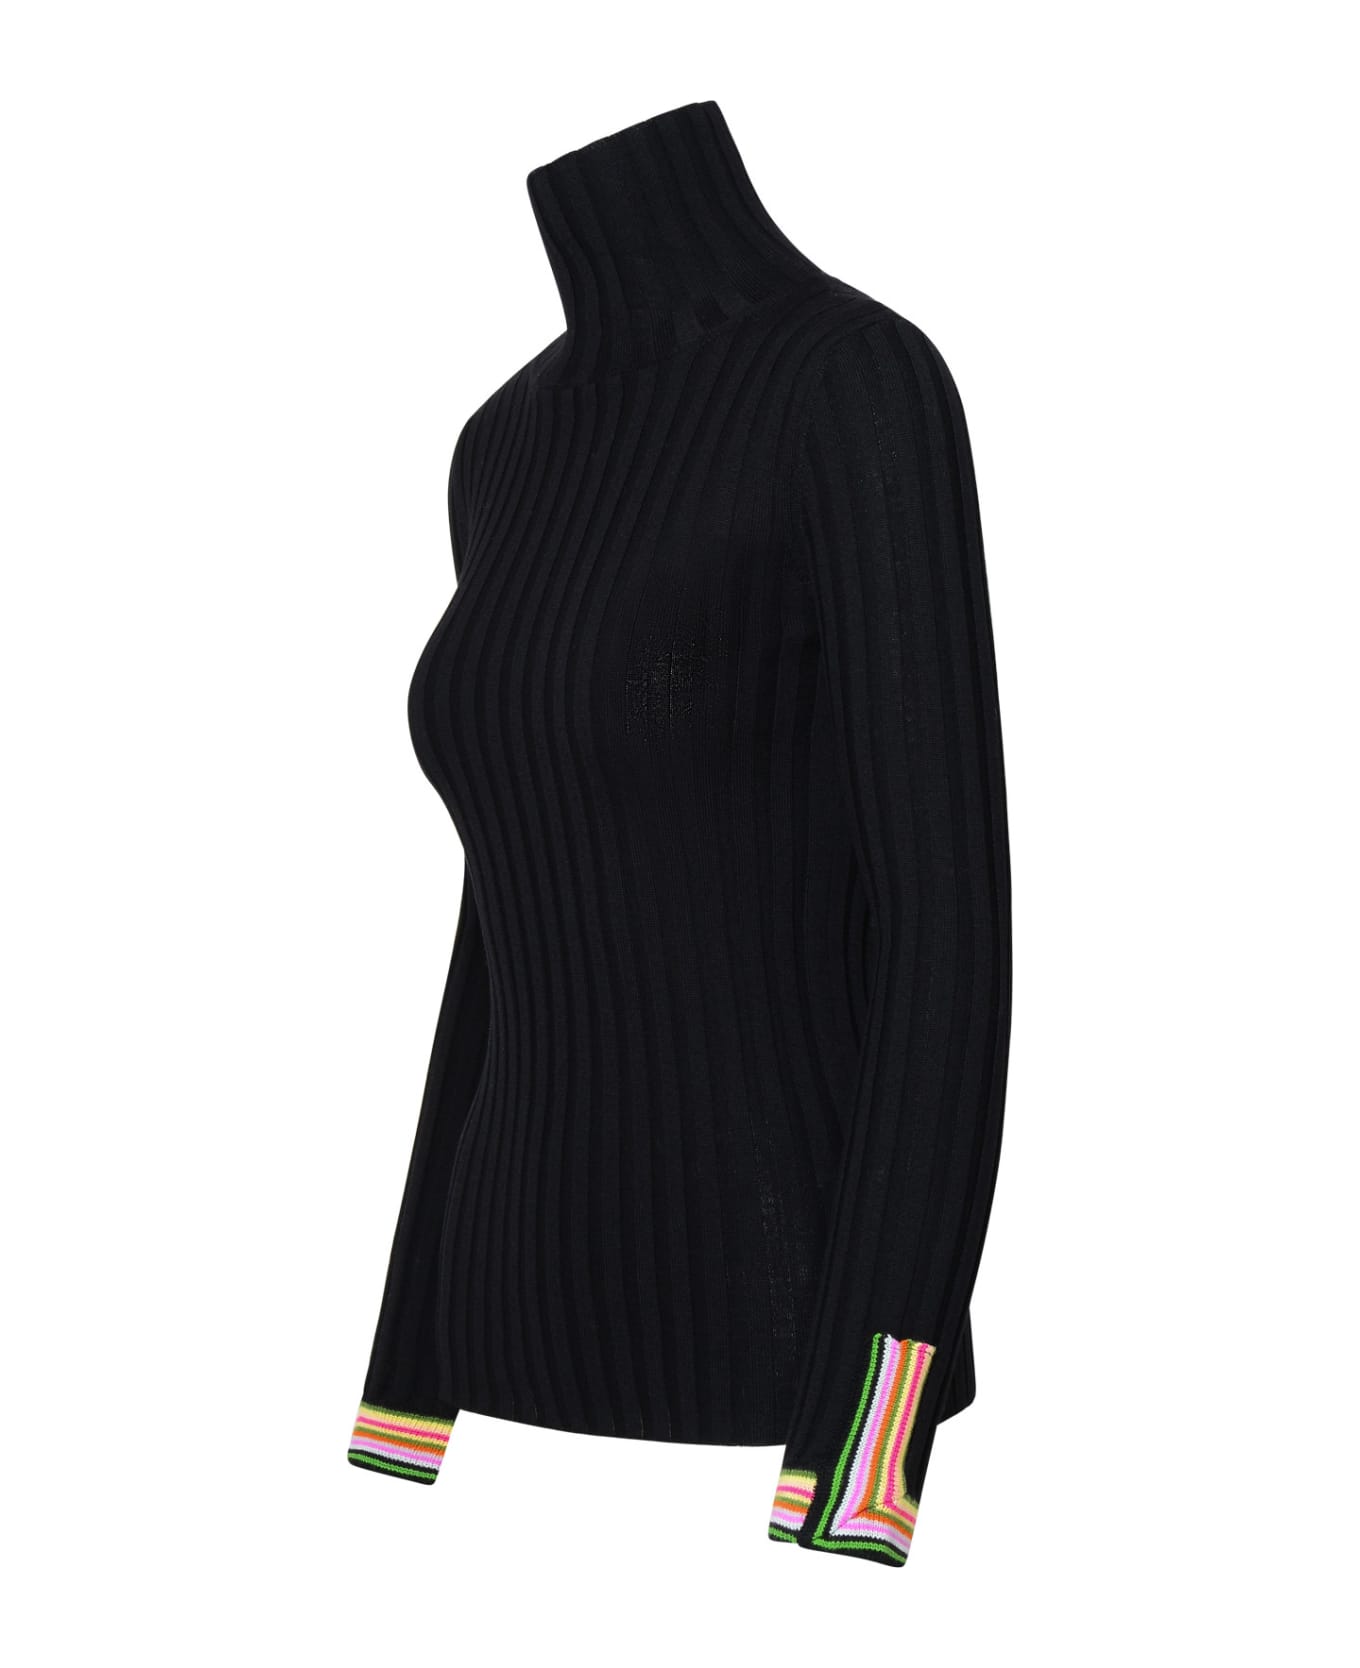 Etro Black Wool Turtleneck Sweater - Black